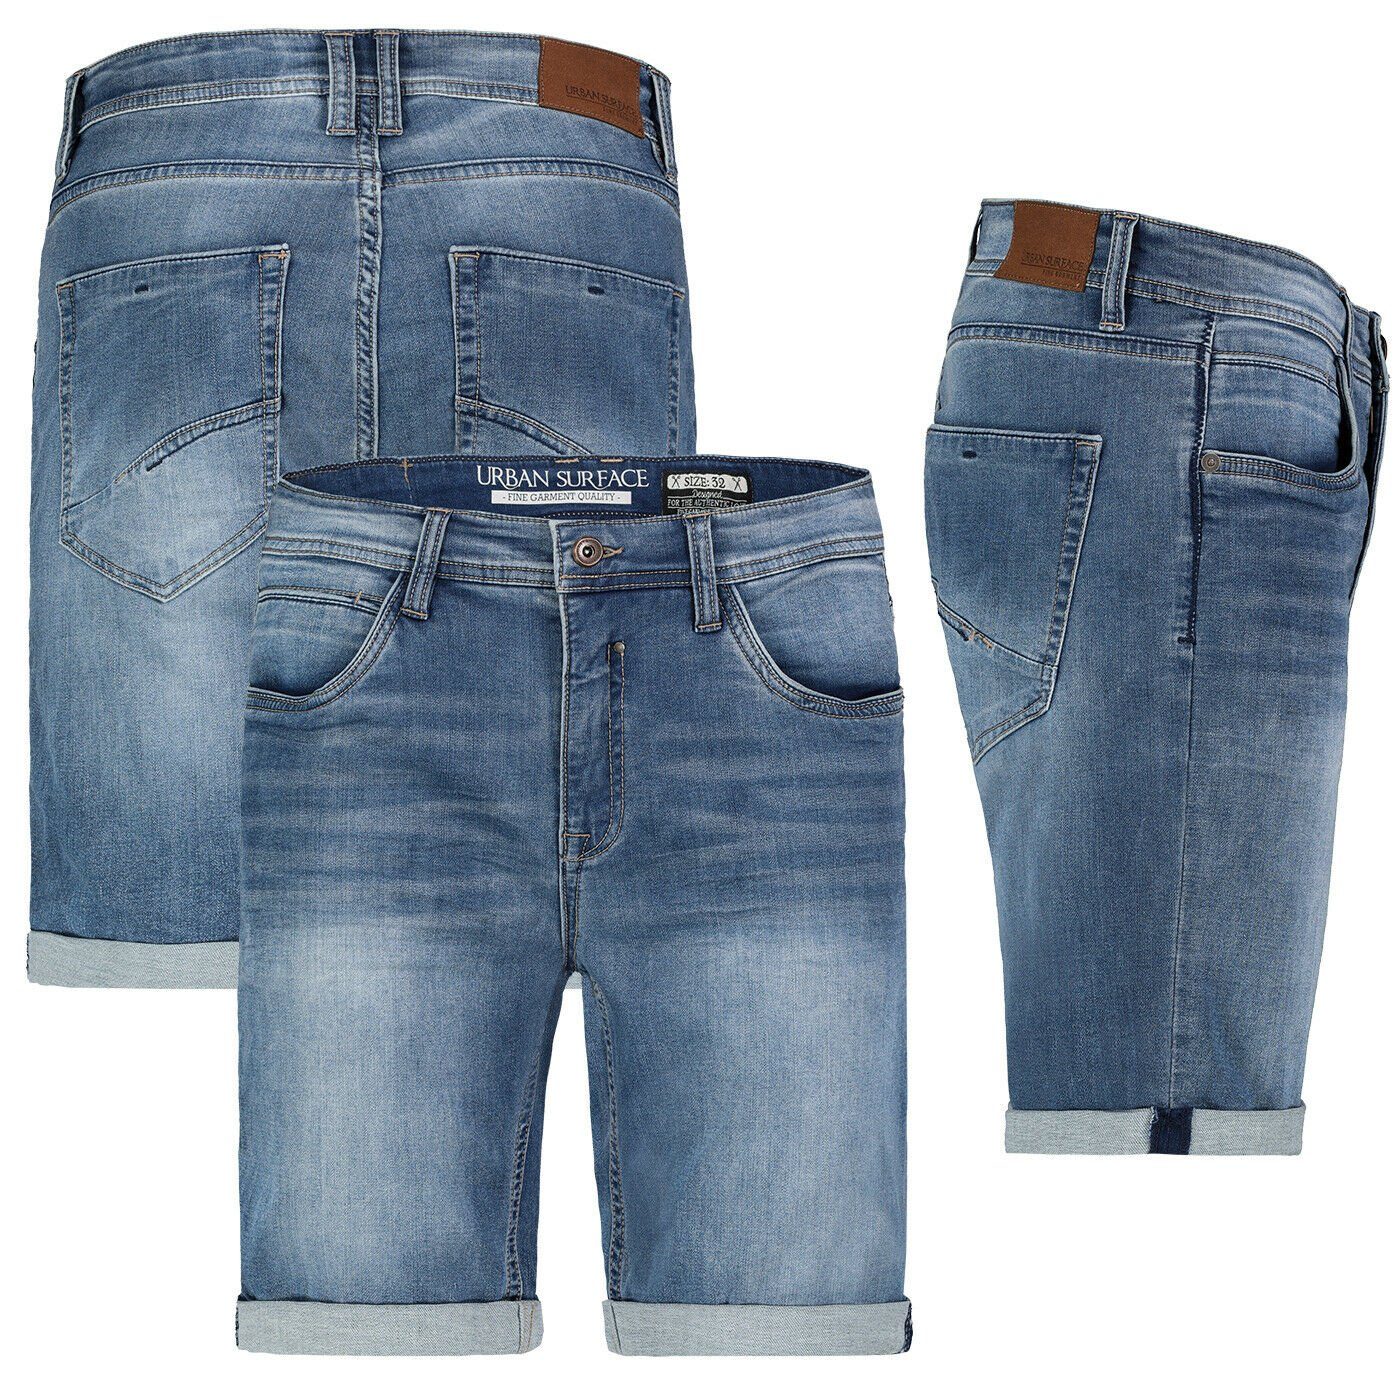 Herren Freizeit Middle Urban Bermuda Jeans Surface Bermudas Denim Blue kurze Shorts Hose Jogging Sweat